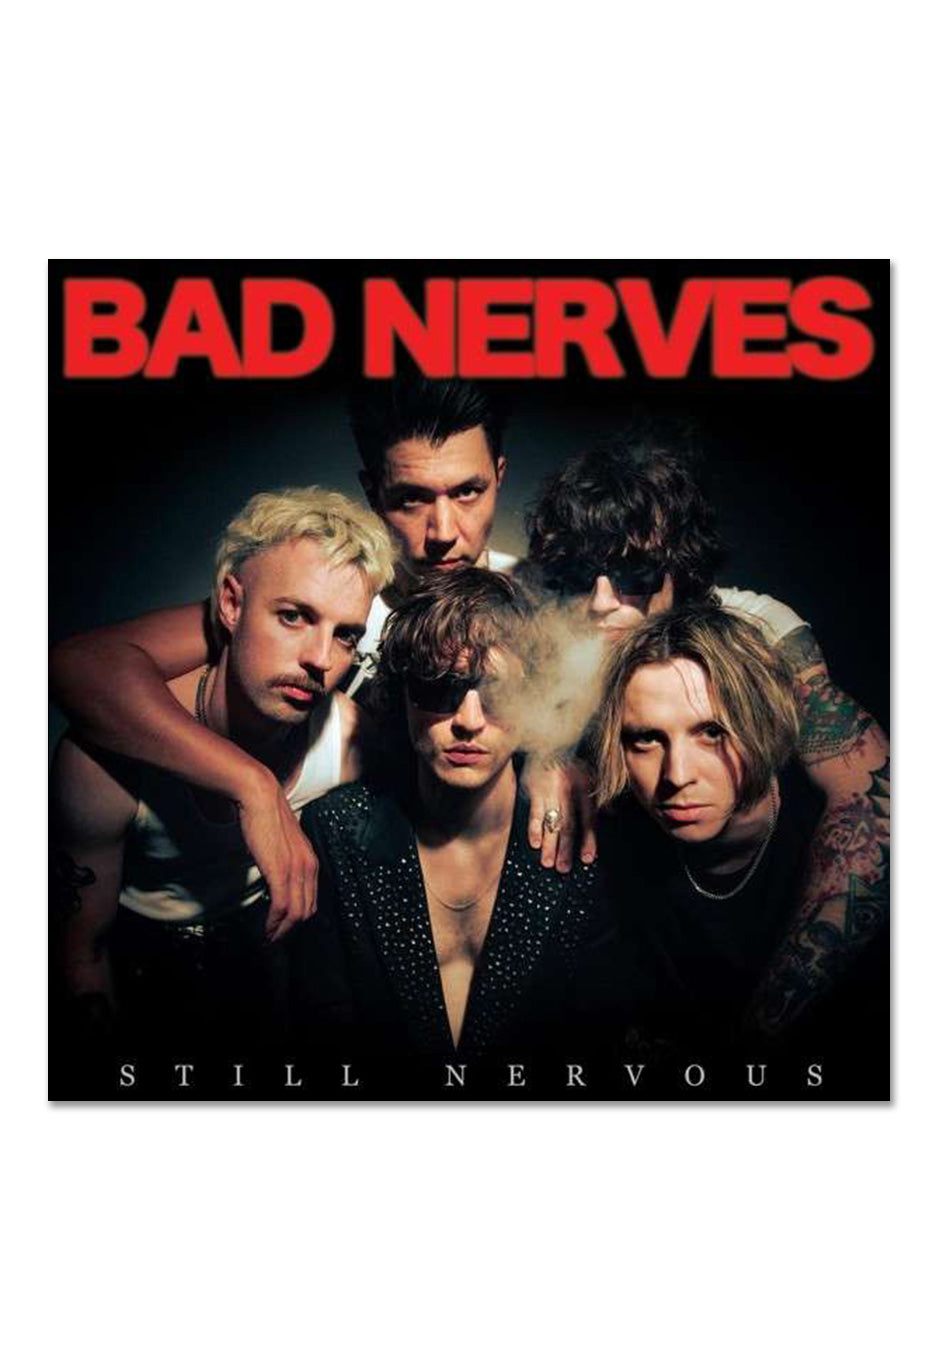 Bad Nerves - Still Nervous - Vinyl